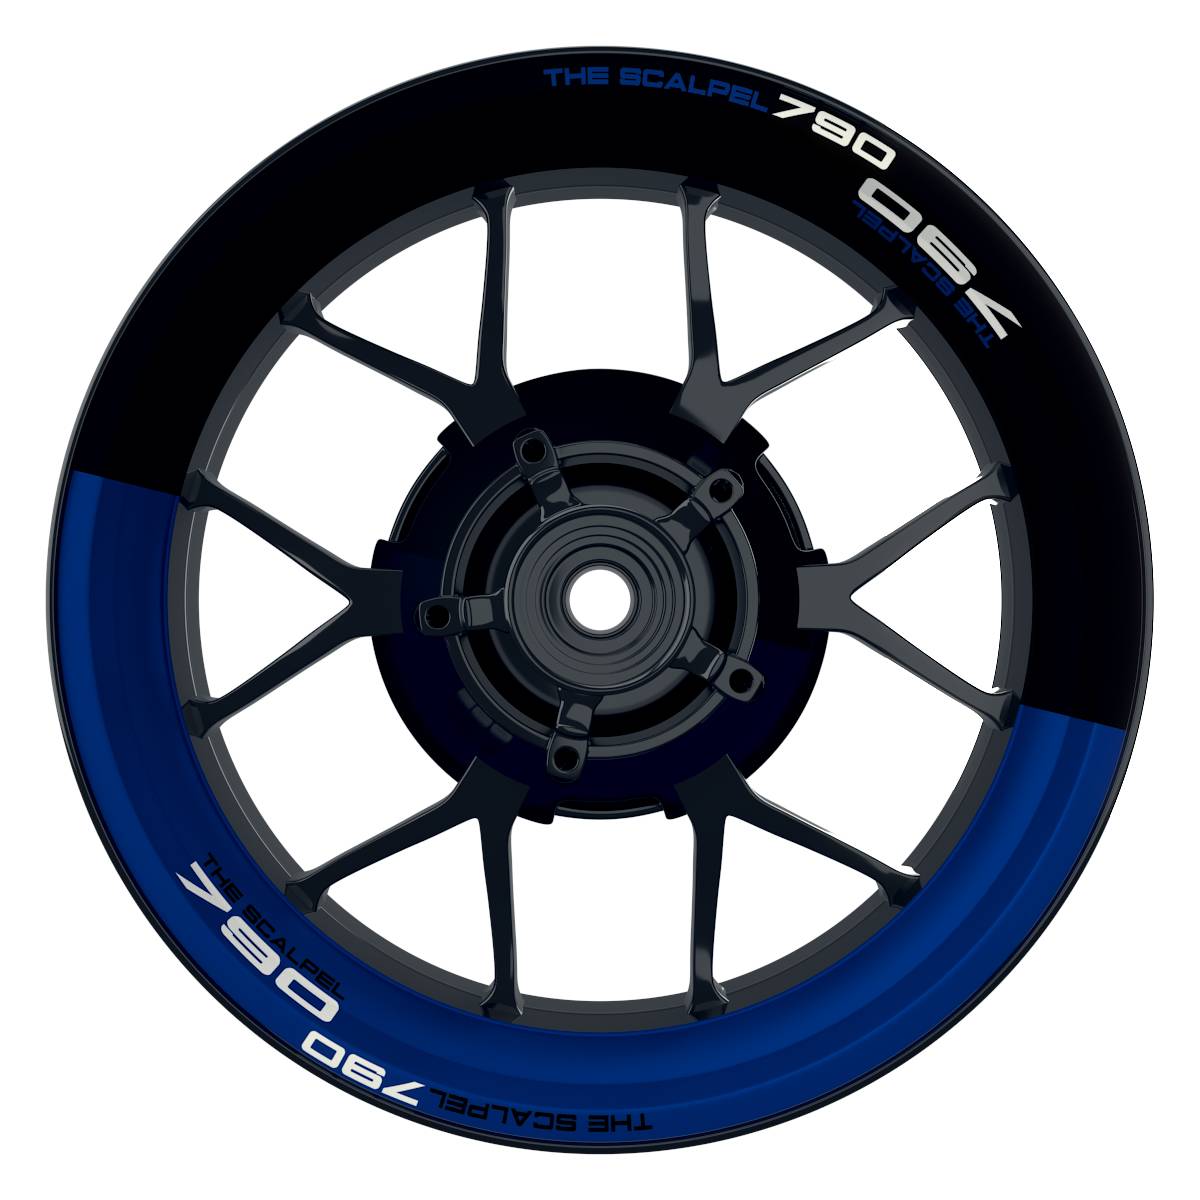 THE SCALPEL 790 halb halb schwarz blau Wheelsticker Felgenaufkleber